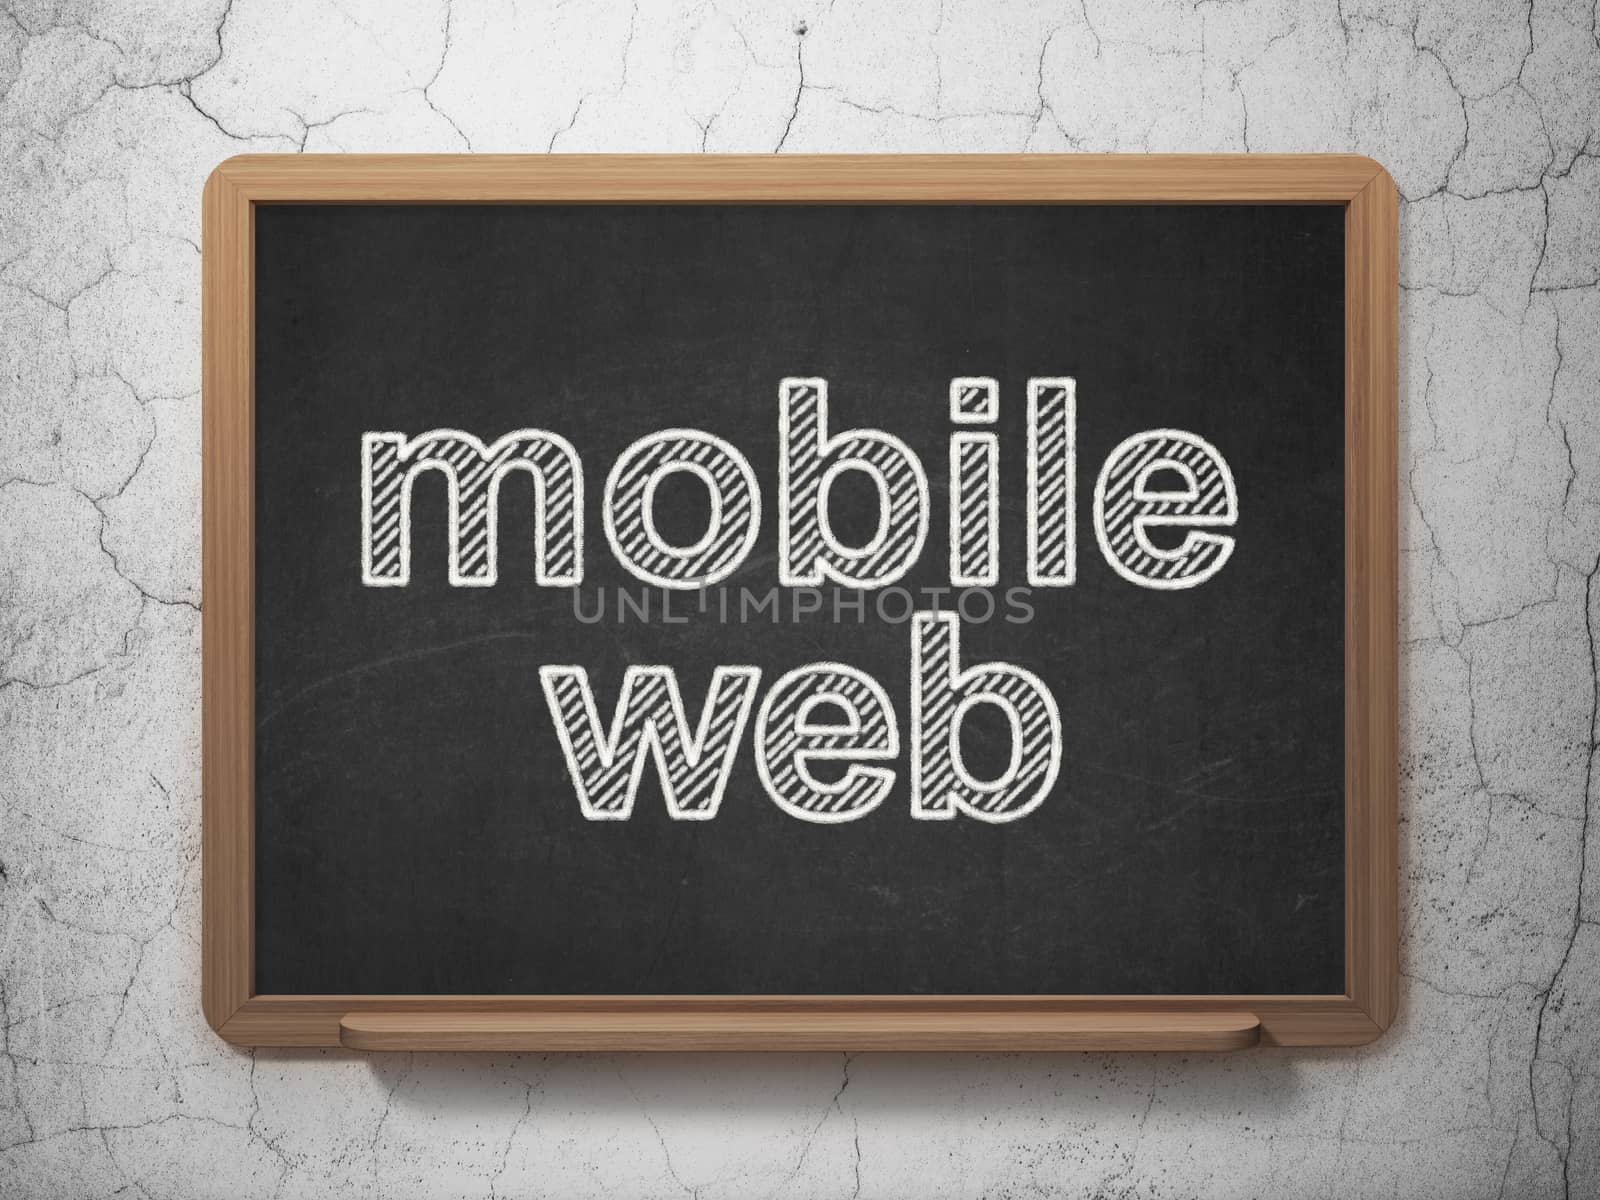 Web design concept: text Mobile Web on Black chalkboard on grunge wall background, 3D rendering